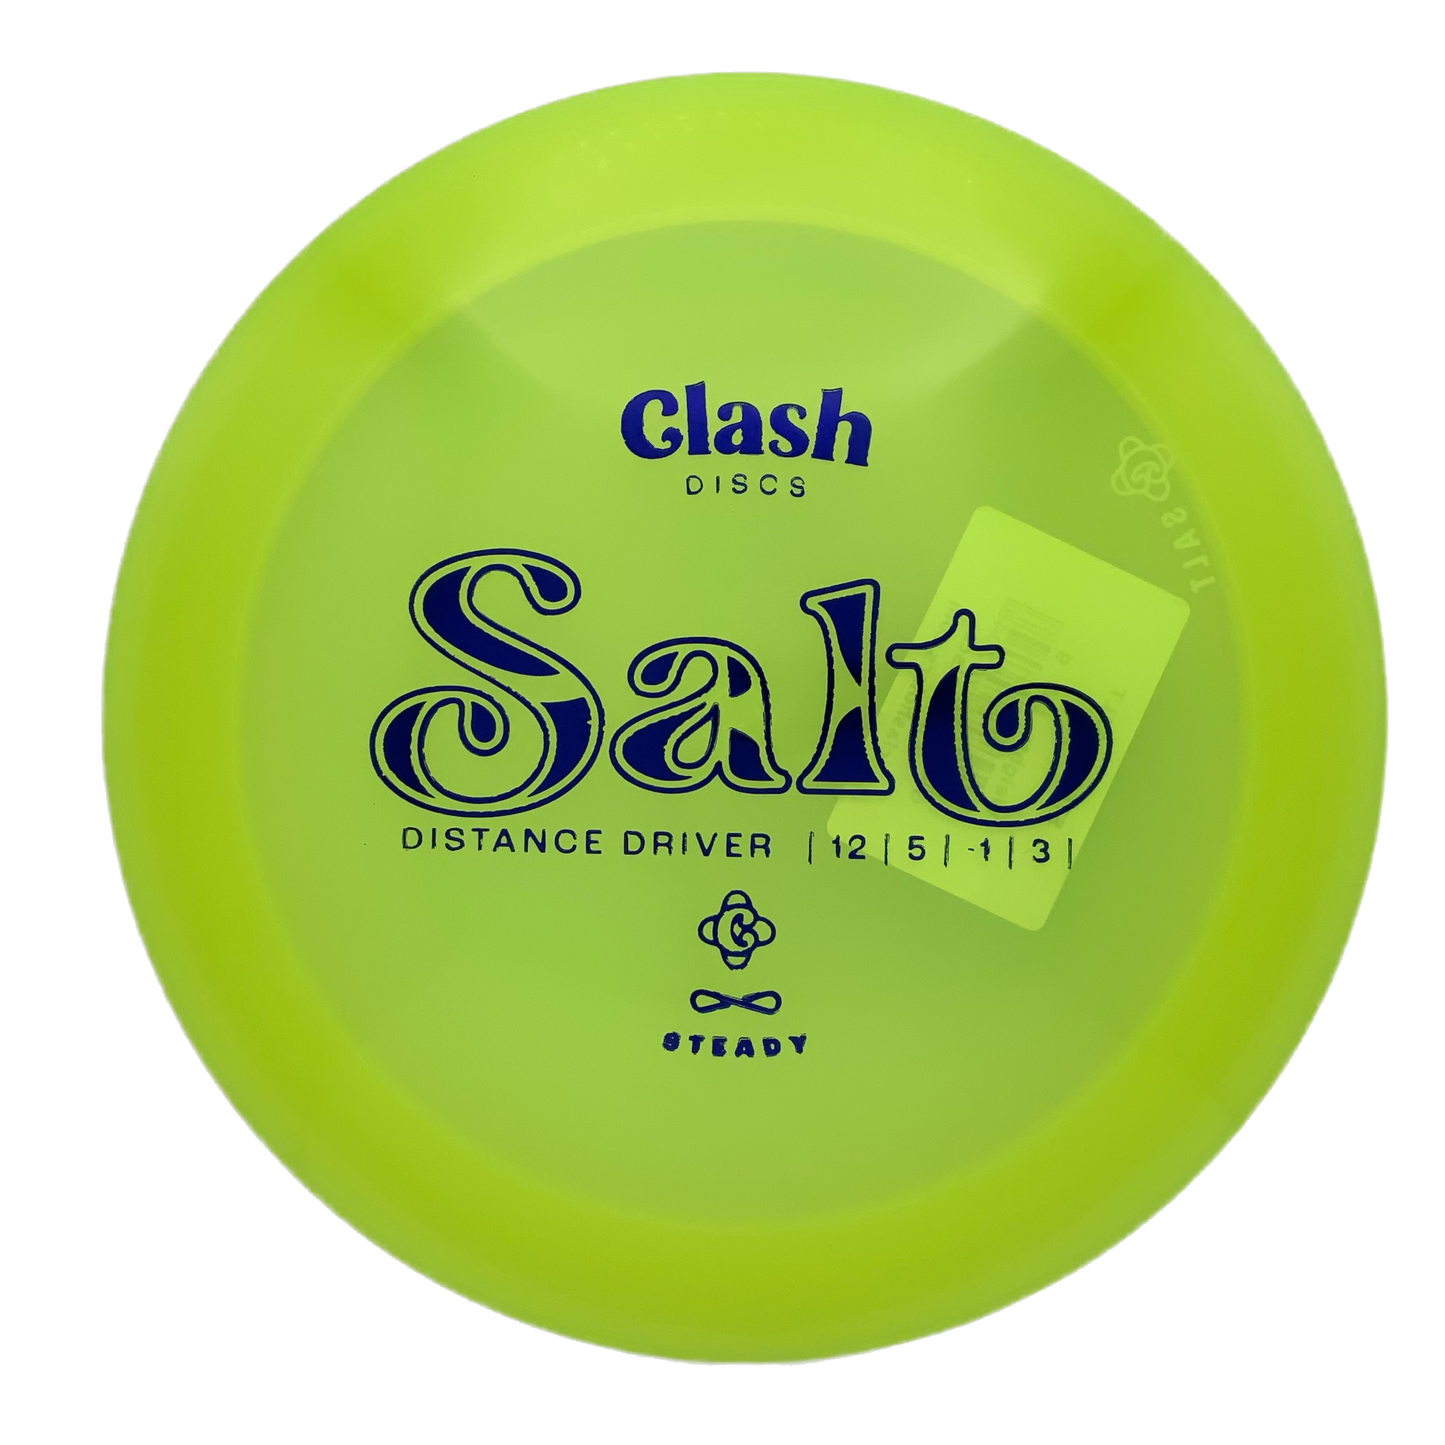 Clash Salt - Astro Discs TX - Houston Disc Golf